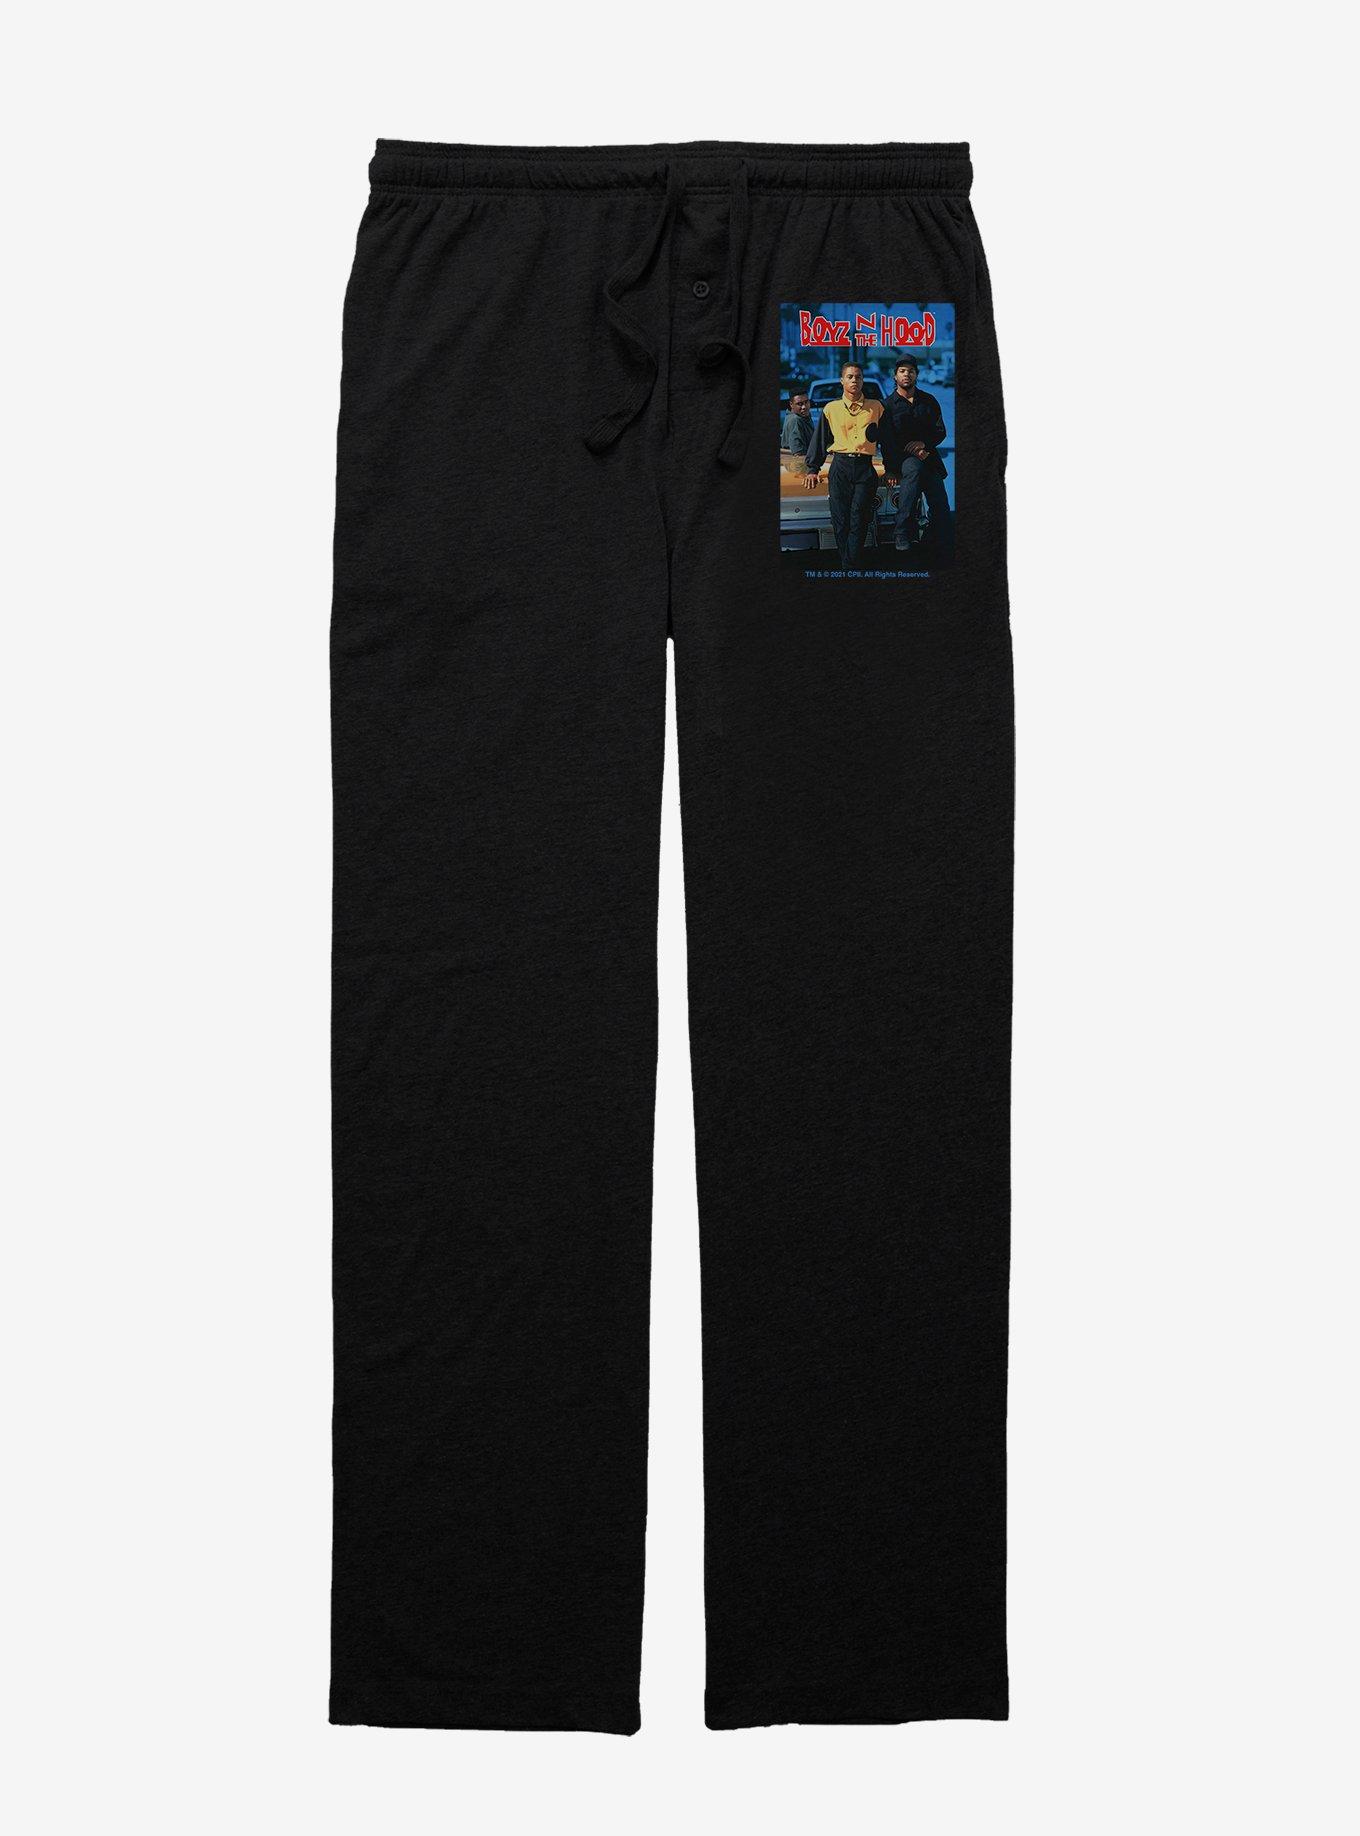 Boyz N The Hood Movie Poster Pajama Pants, BLACK, hi-res